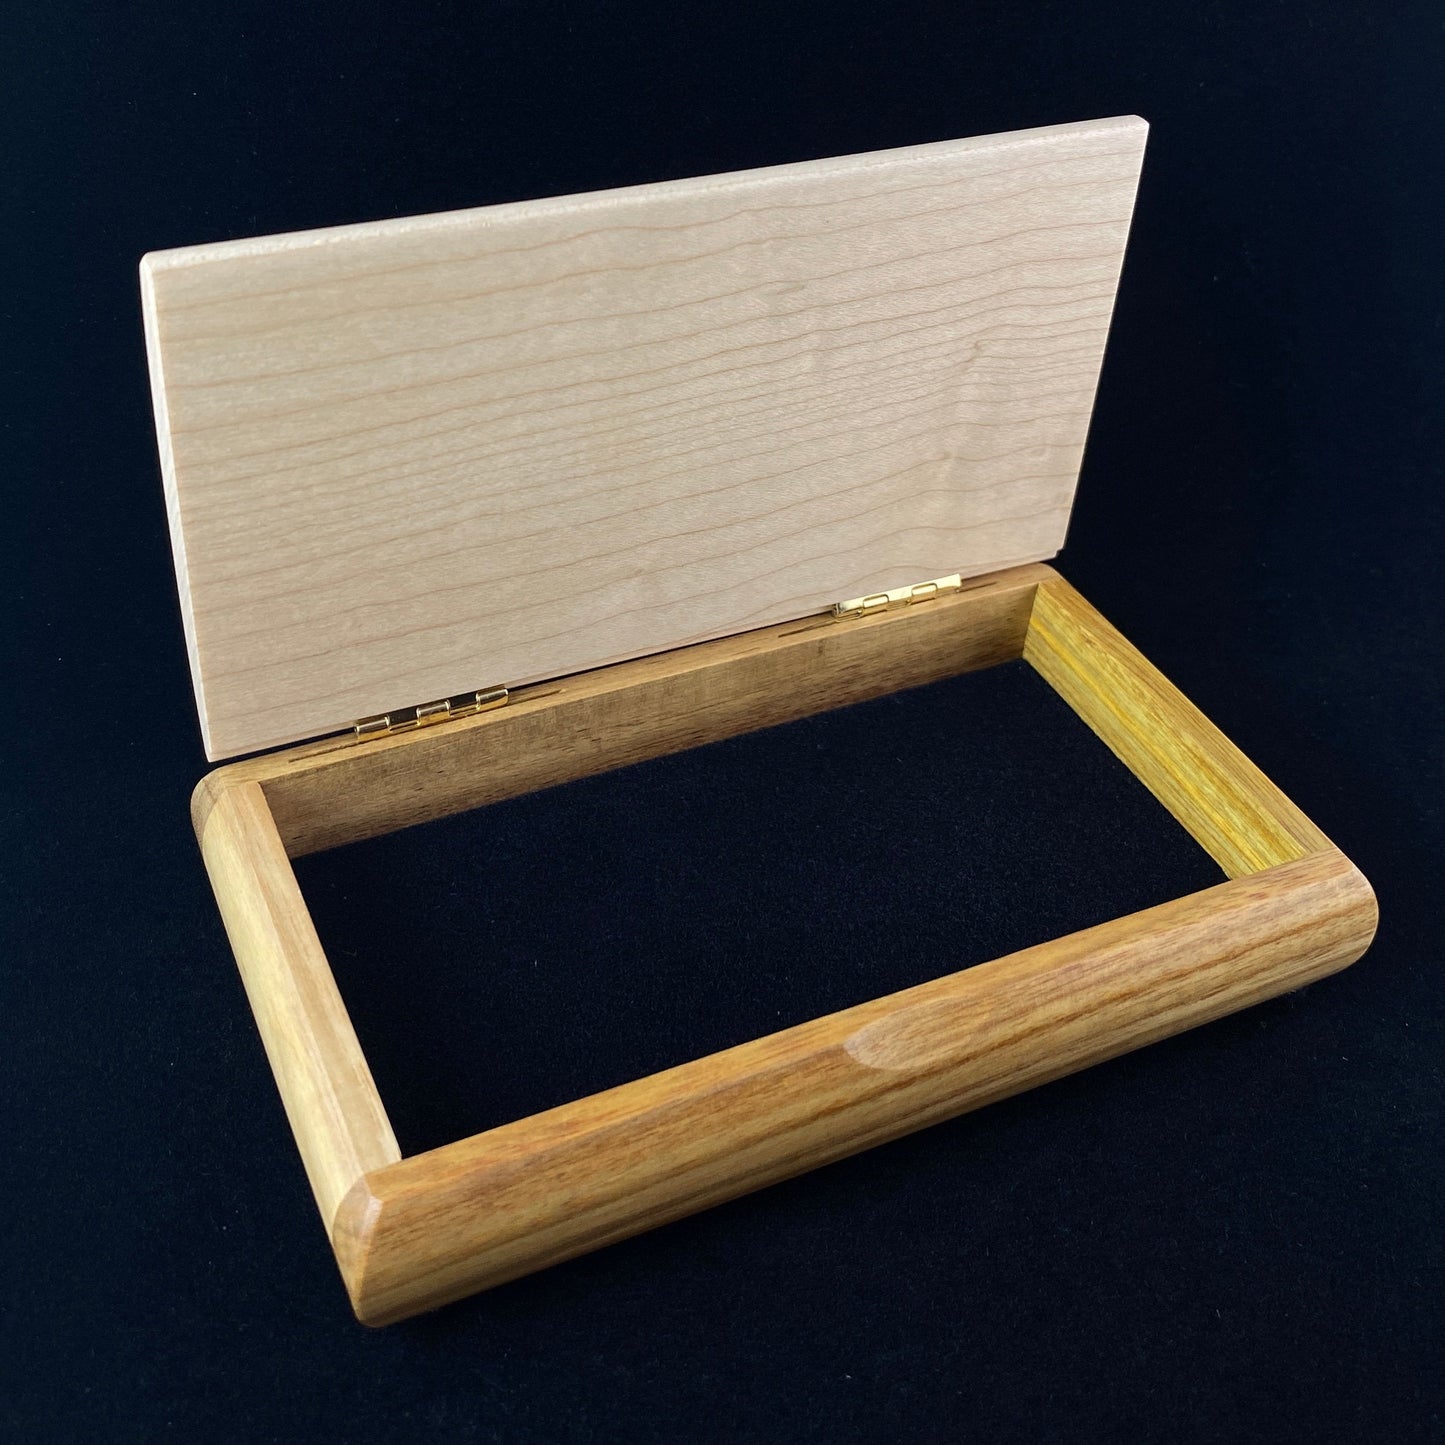 Great Lakes Handmade Wooden Box - Birdseye Maple and Canarywood